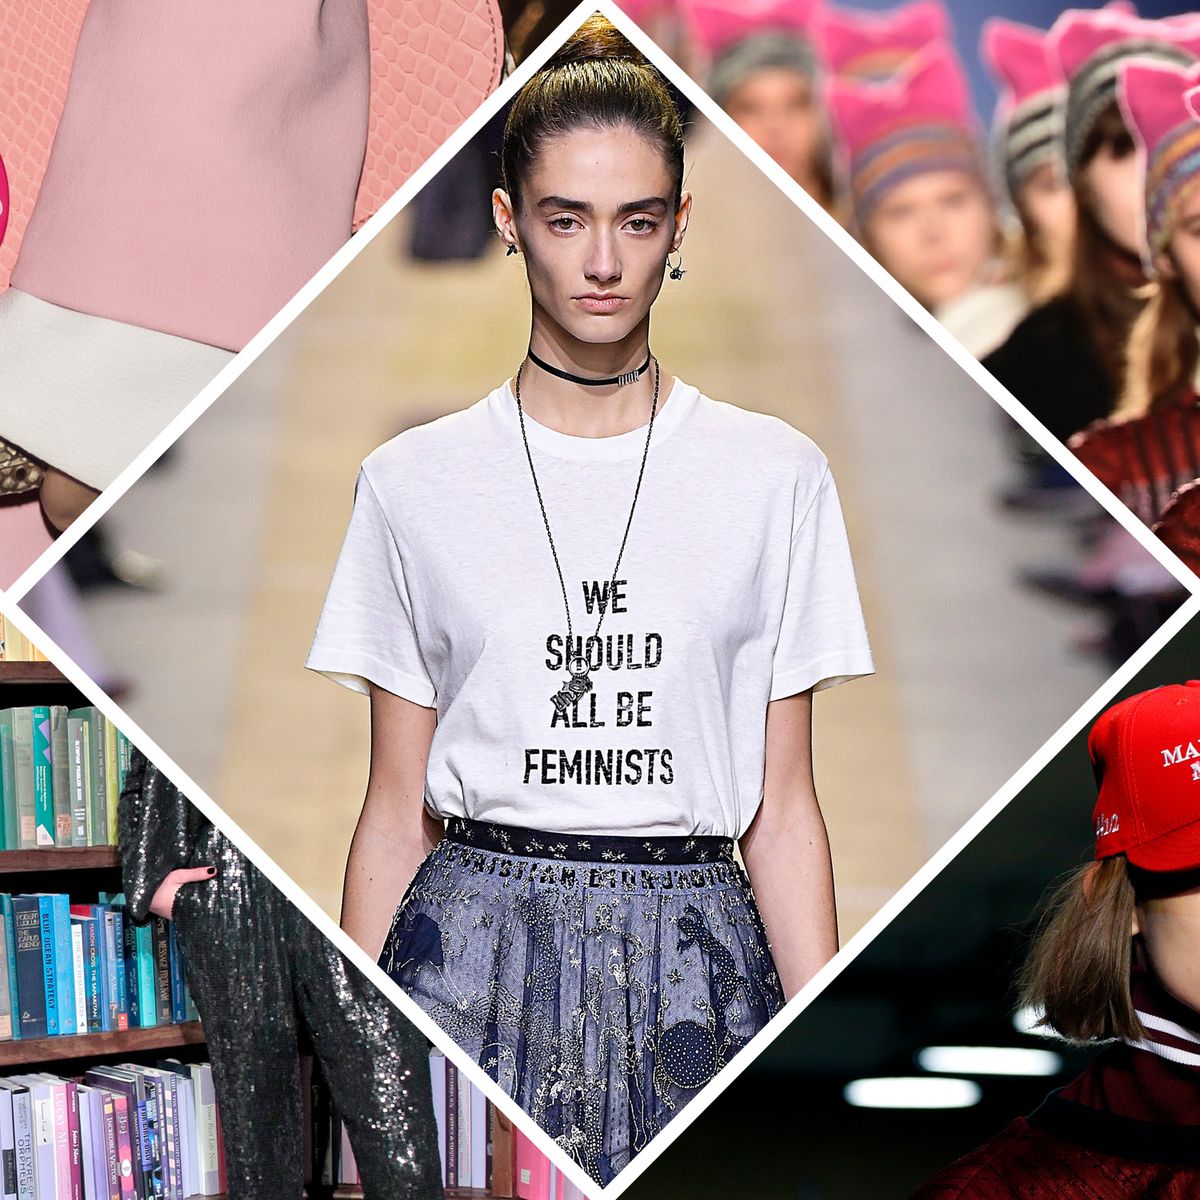 Women Make The World Go Round Feminist Tote Bag - The Feminista